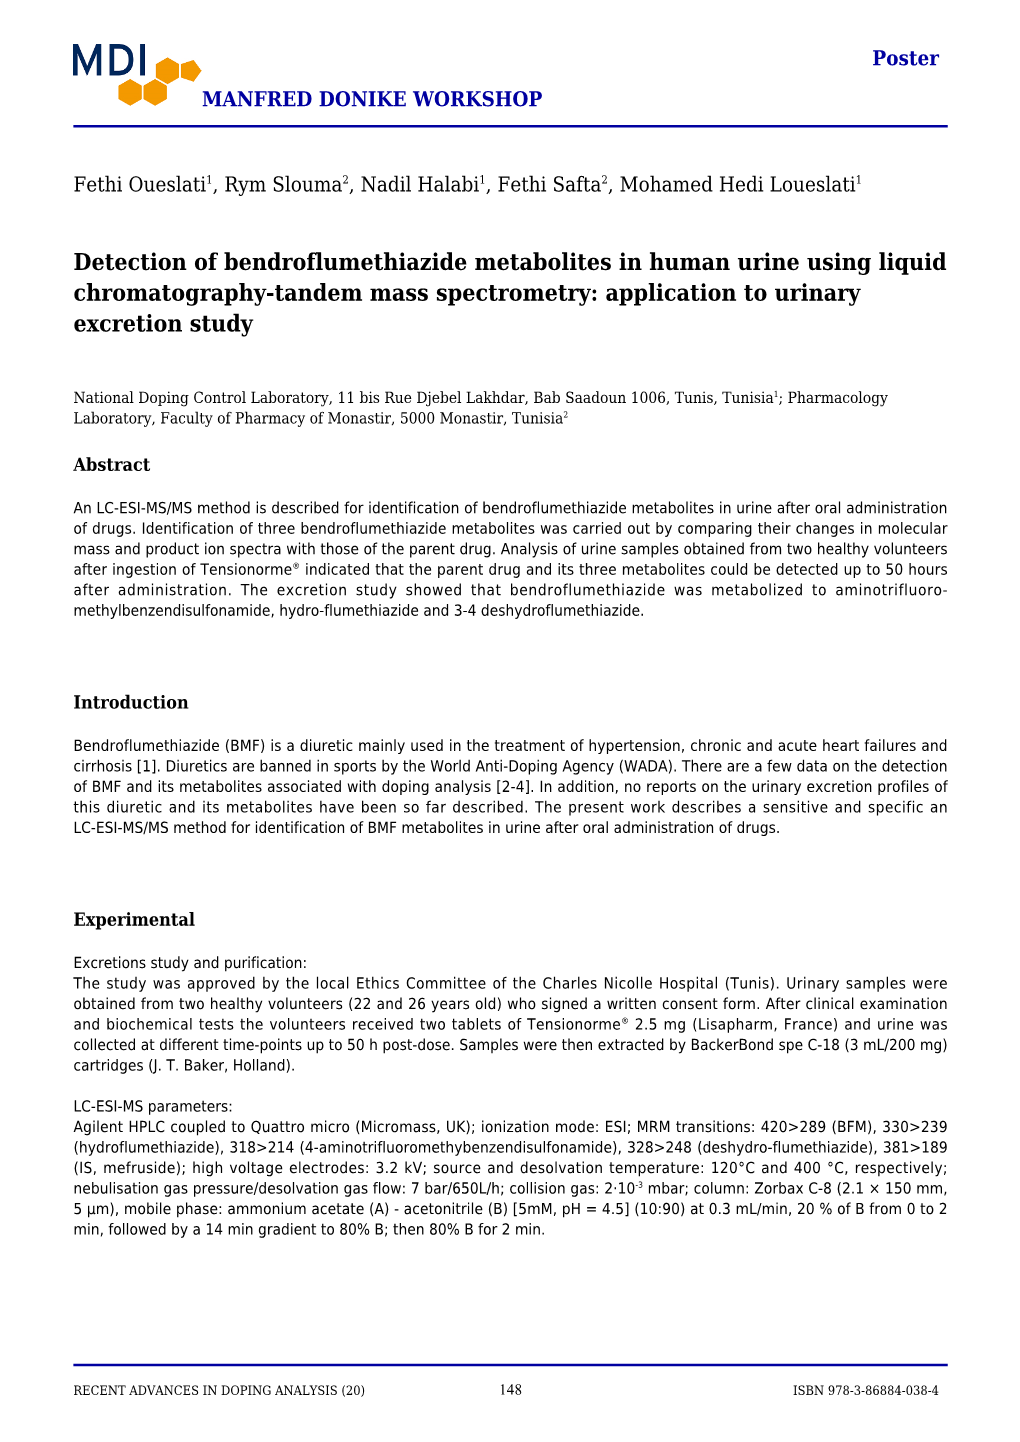 Detection of Bendroflumethiazide Metabolites in Human Urine Using Liquid Chromatography-Tandem Mass Spectrometry: Application to Urinary Excretion Study